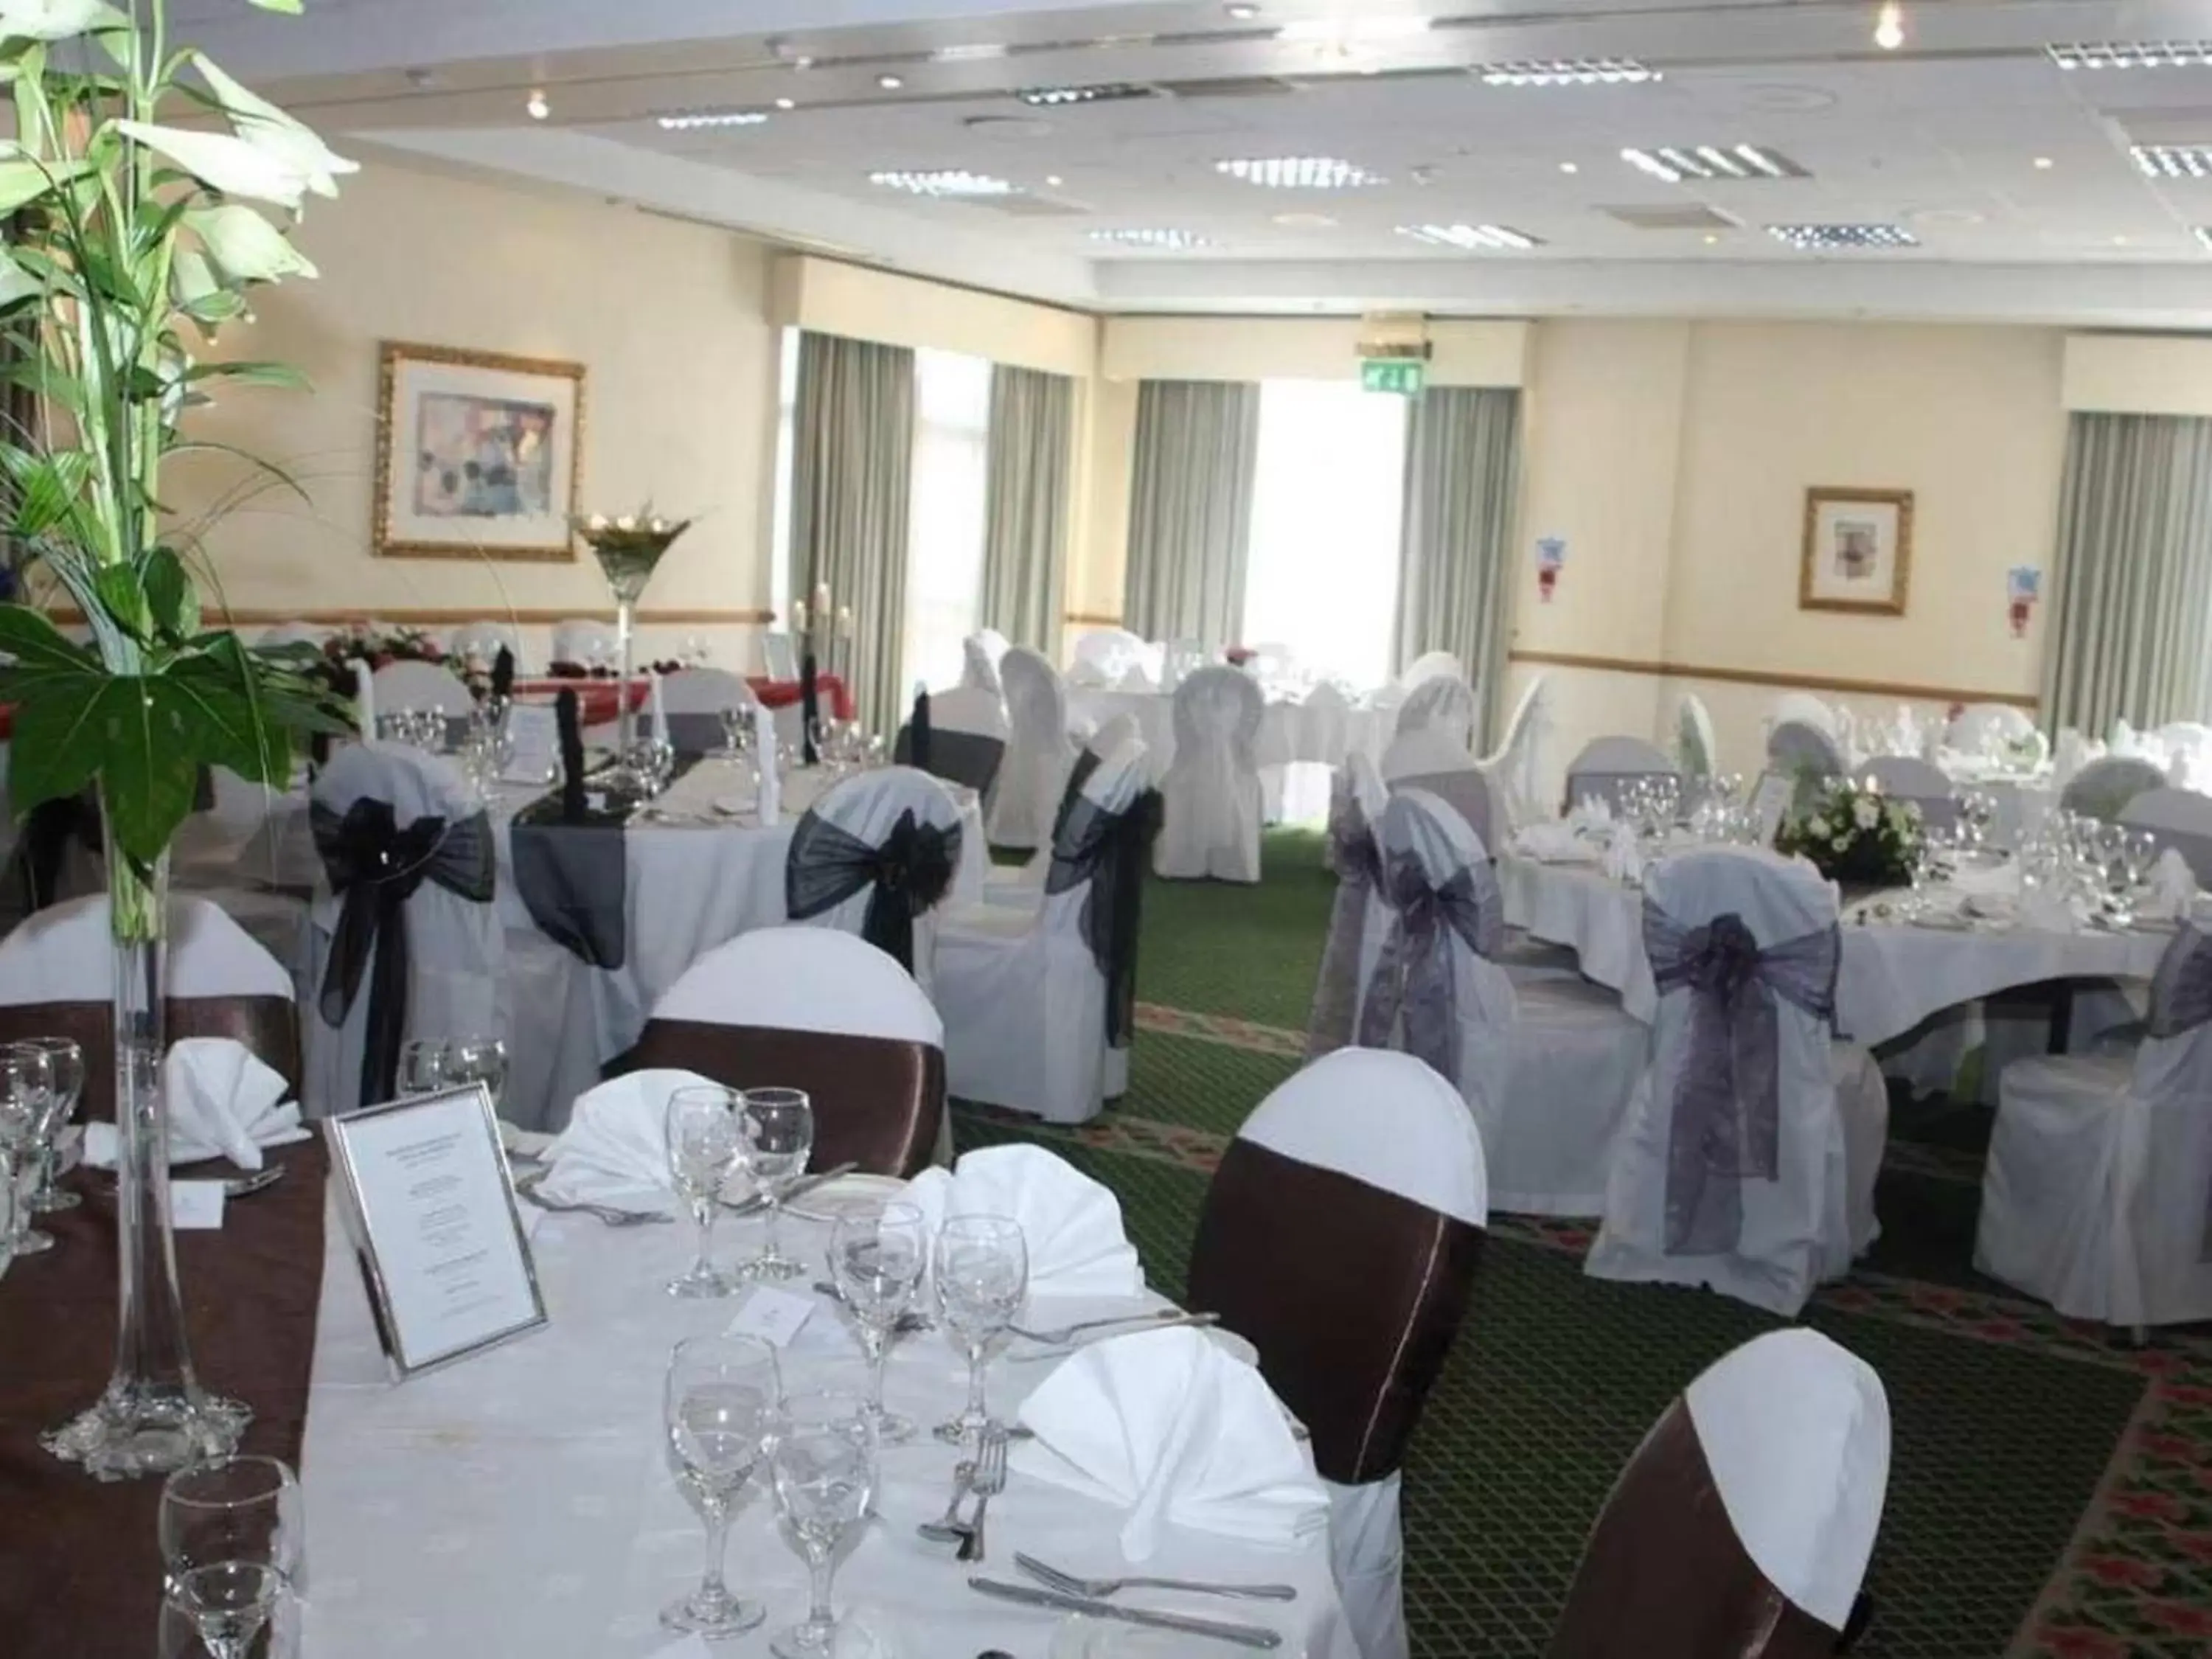 Banquet/Function facilities, Banquet Facilities in Basingstoke Country Hotel & Spa